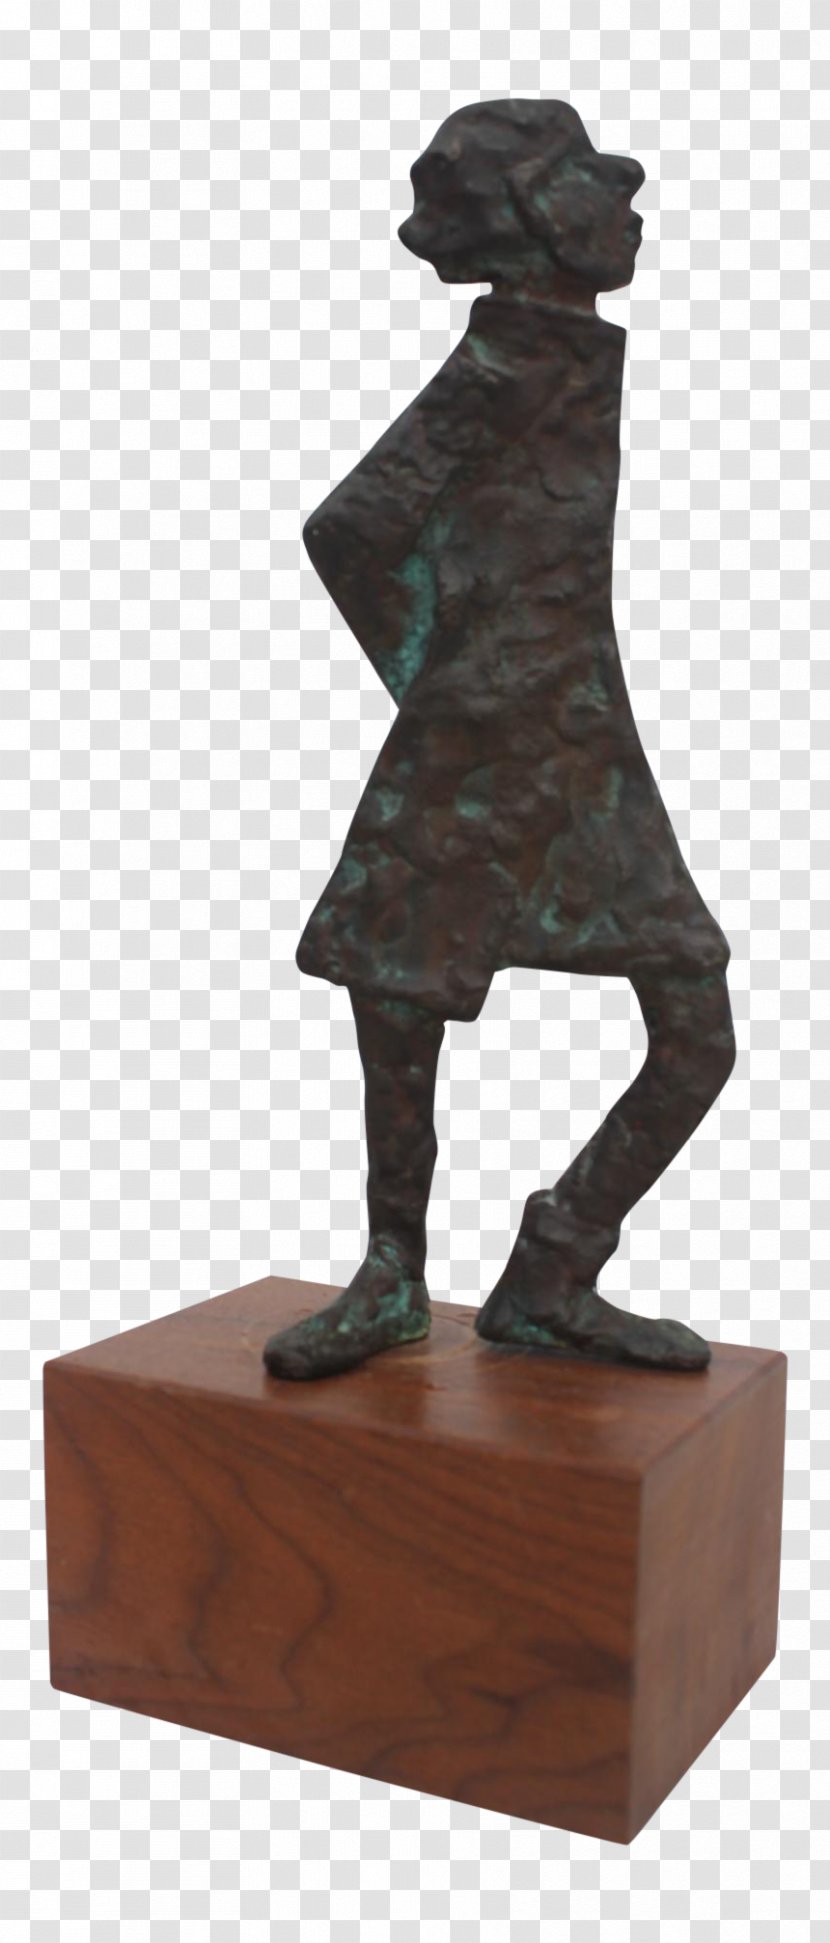 Bronze Sculpture - Statue Transparent PNG